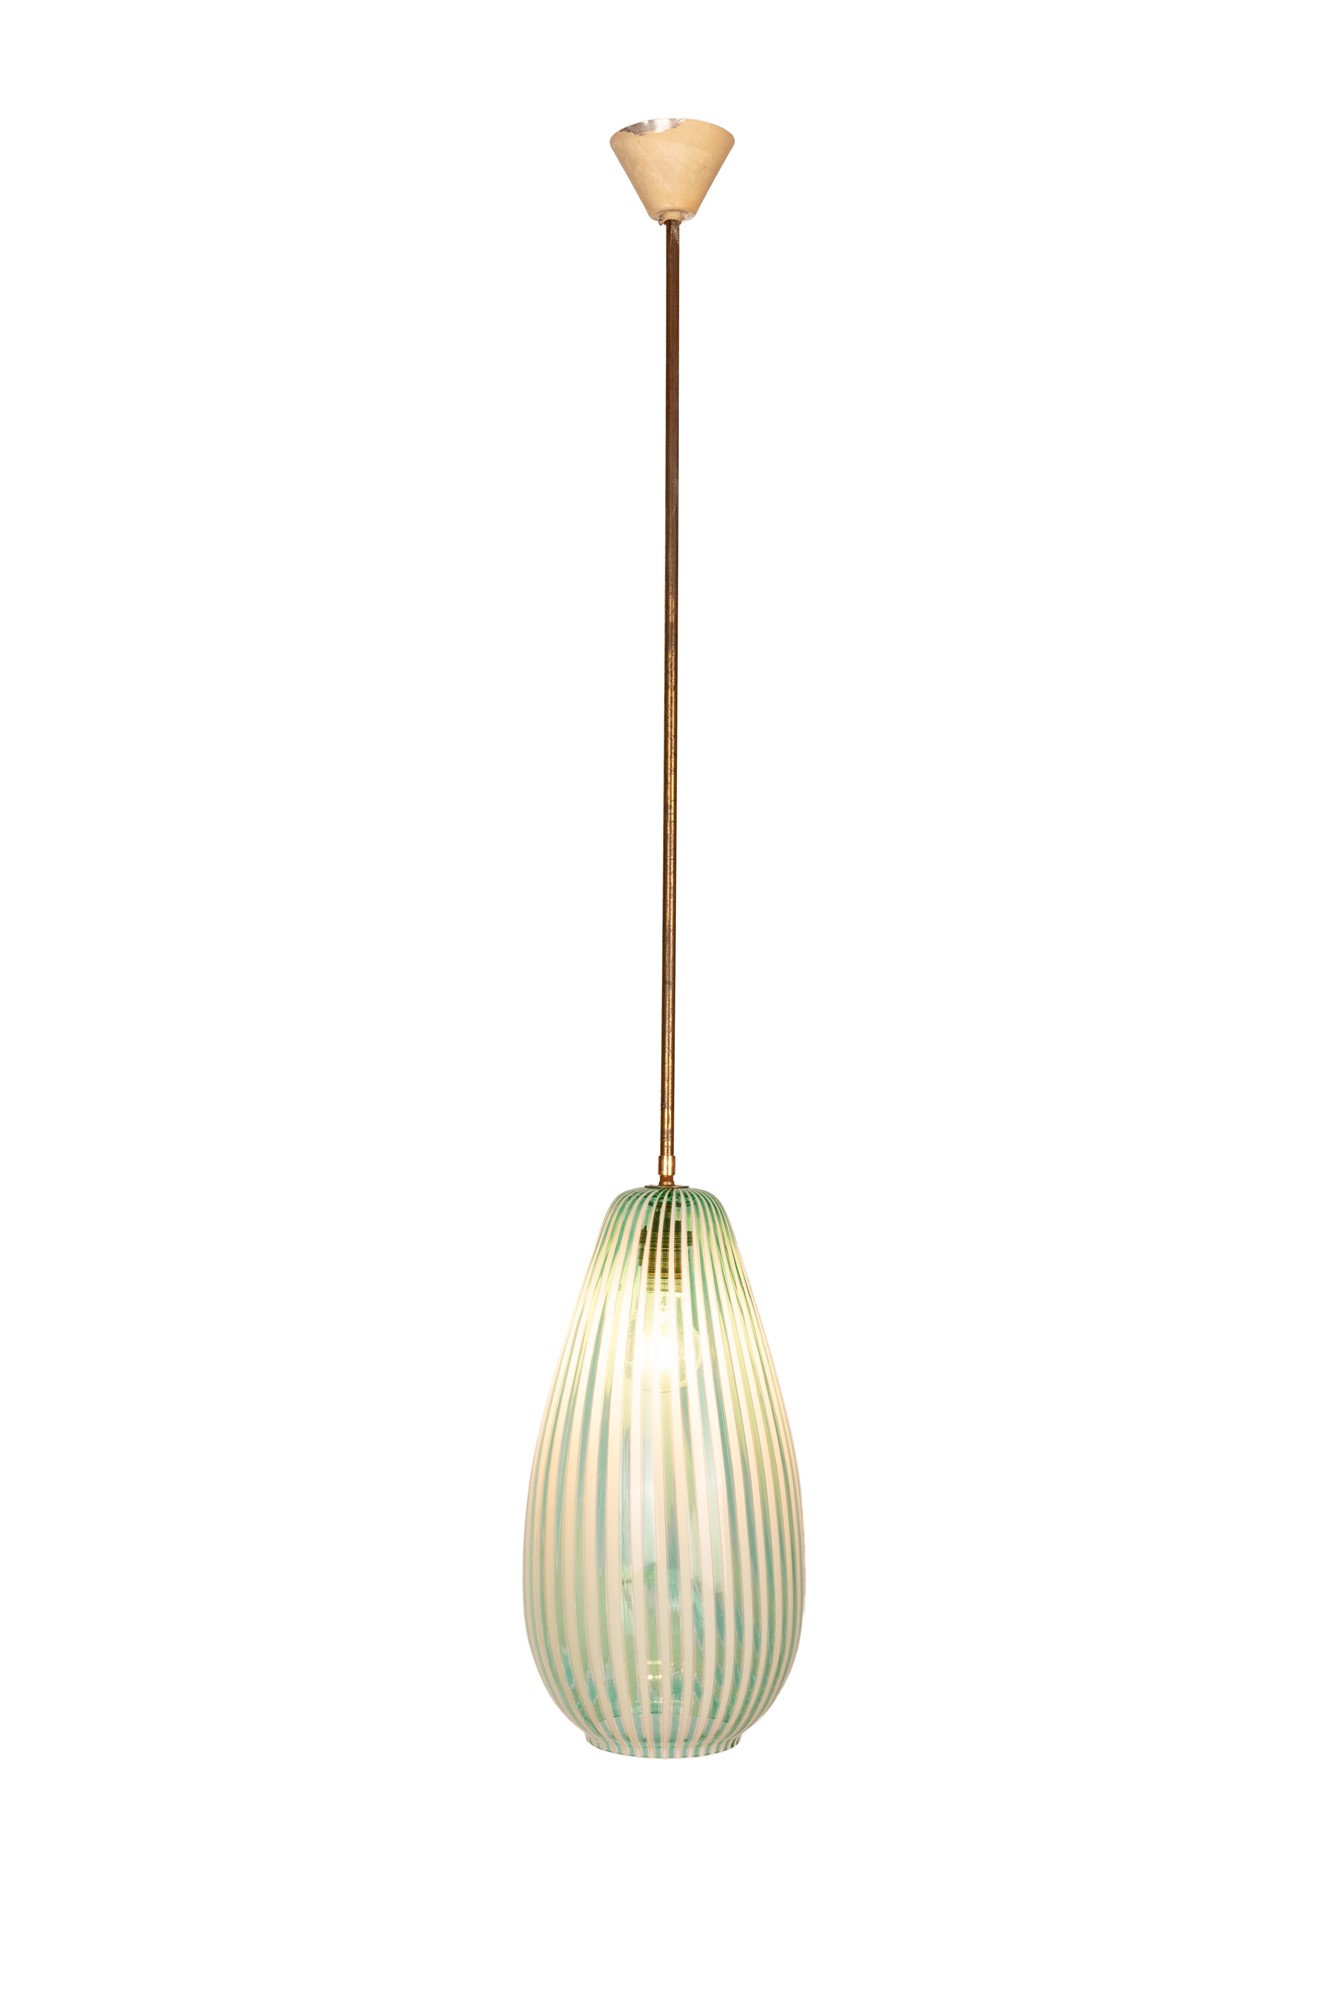 Hanging lamp in zanrifico glass - Image 16 of 16